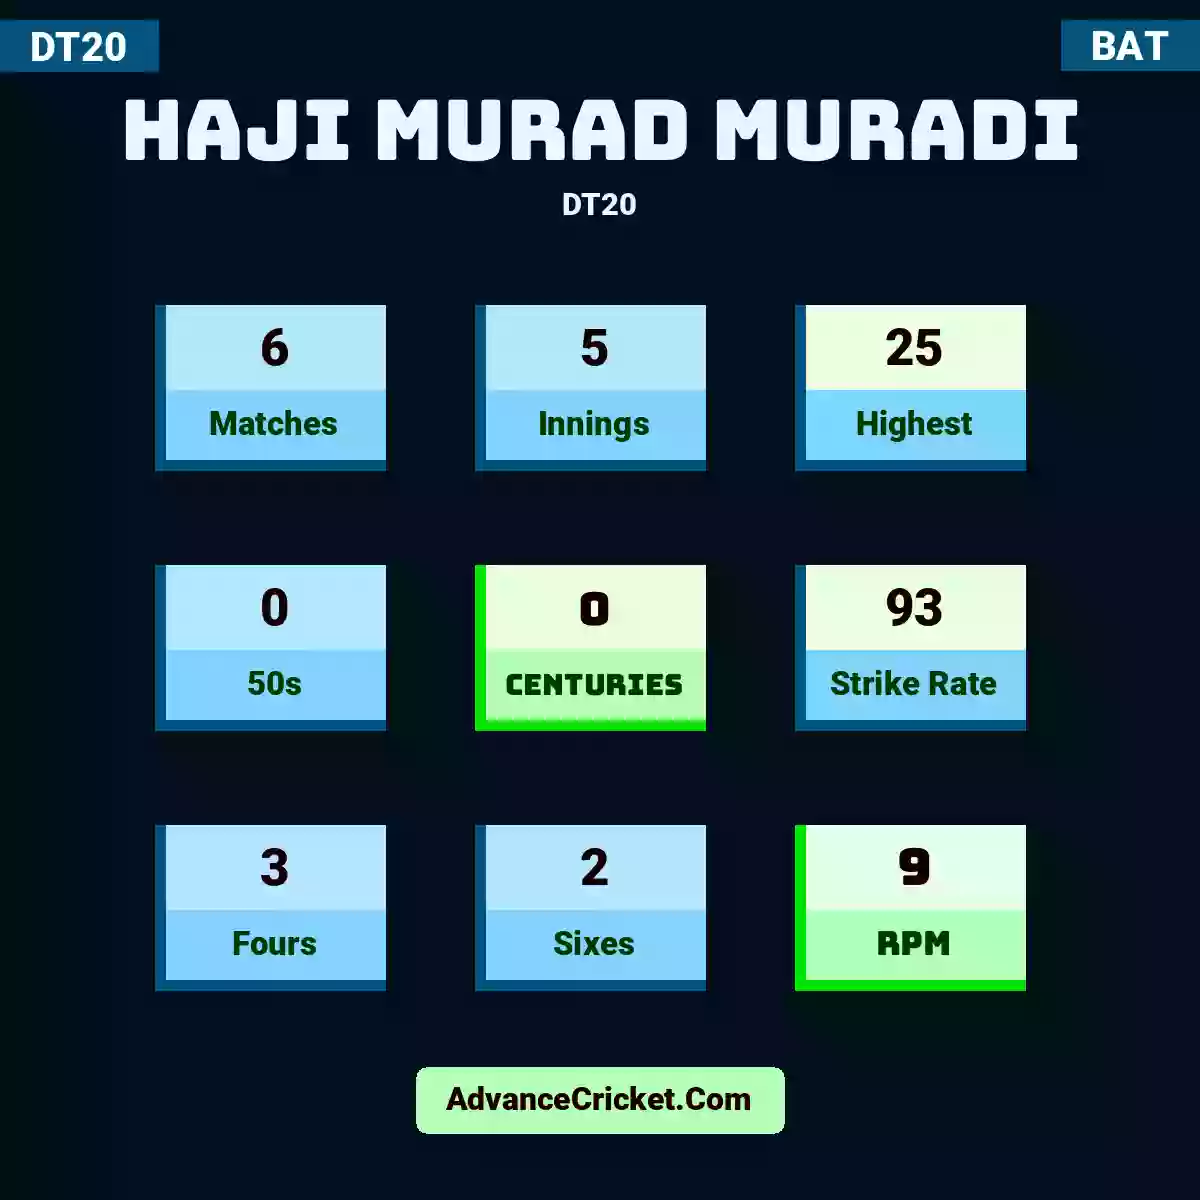 Haji Murad Muradi DT20 , Haji Murad Muradi played 6 matches, scored 25 runs as highest, 0 half-centuries, and 0 centuries, with a strike rate of 93. H.Murad.Muradi hit 3 fours and 2 sixes, with an RPM of 9.